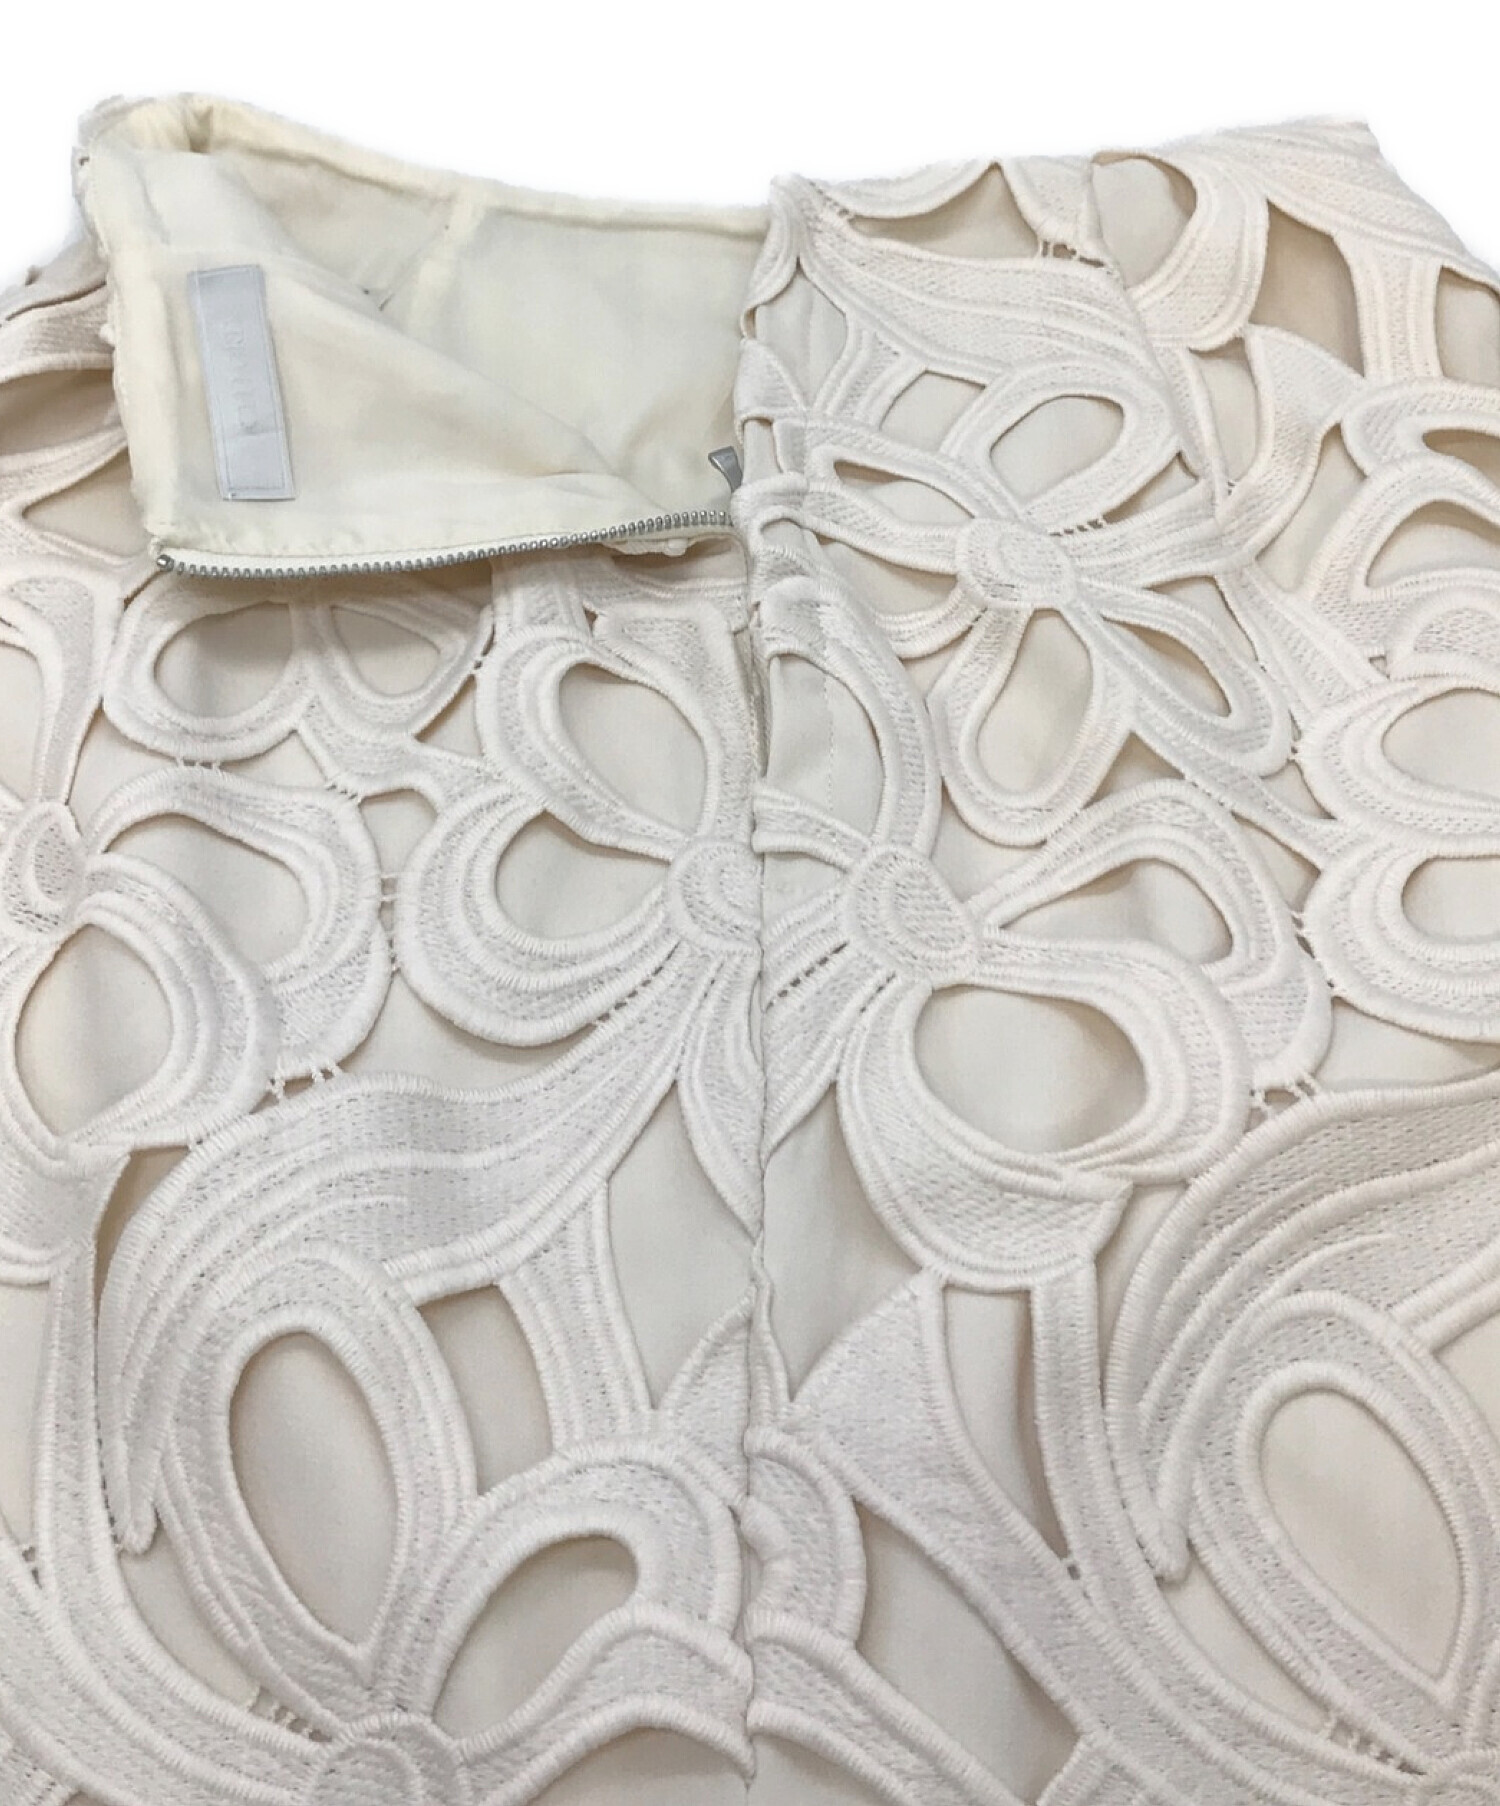 CELFORD (セルフォード) オリジナルリボンレーススカート ホワイト サイズ:38